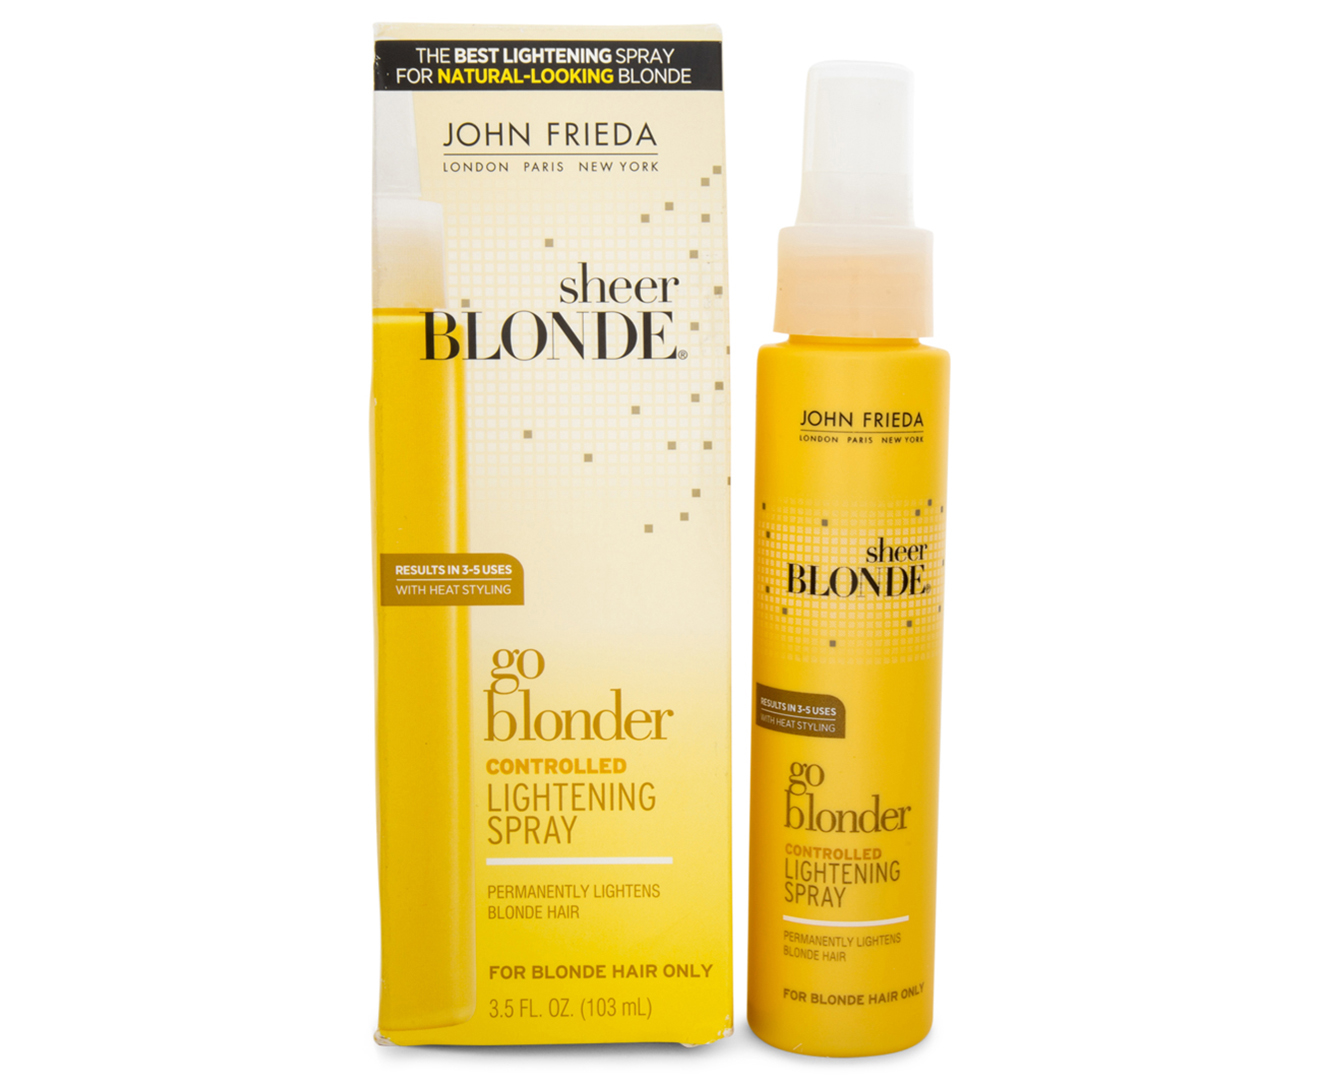 2. John Frieda Sheer Blonde Go Blonder Lightening Spray - wide 5